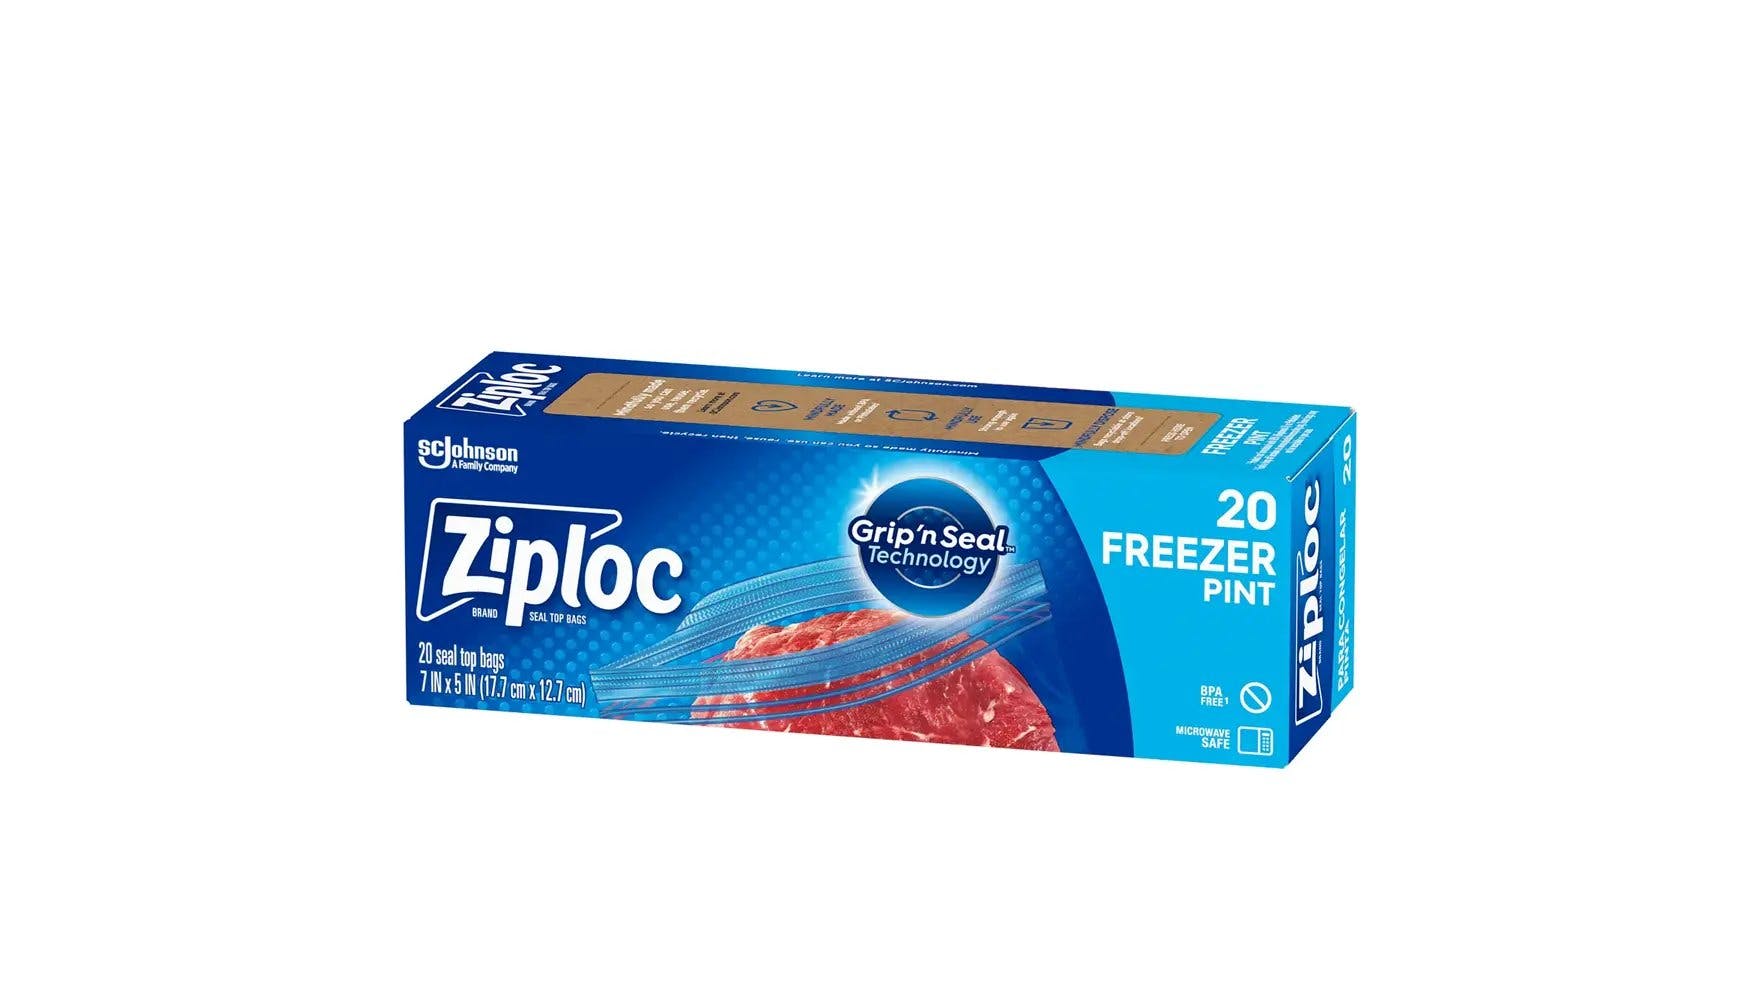 Front of Ziploc small pint sized freezer bag box.